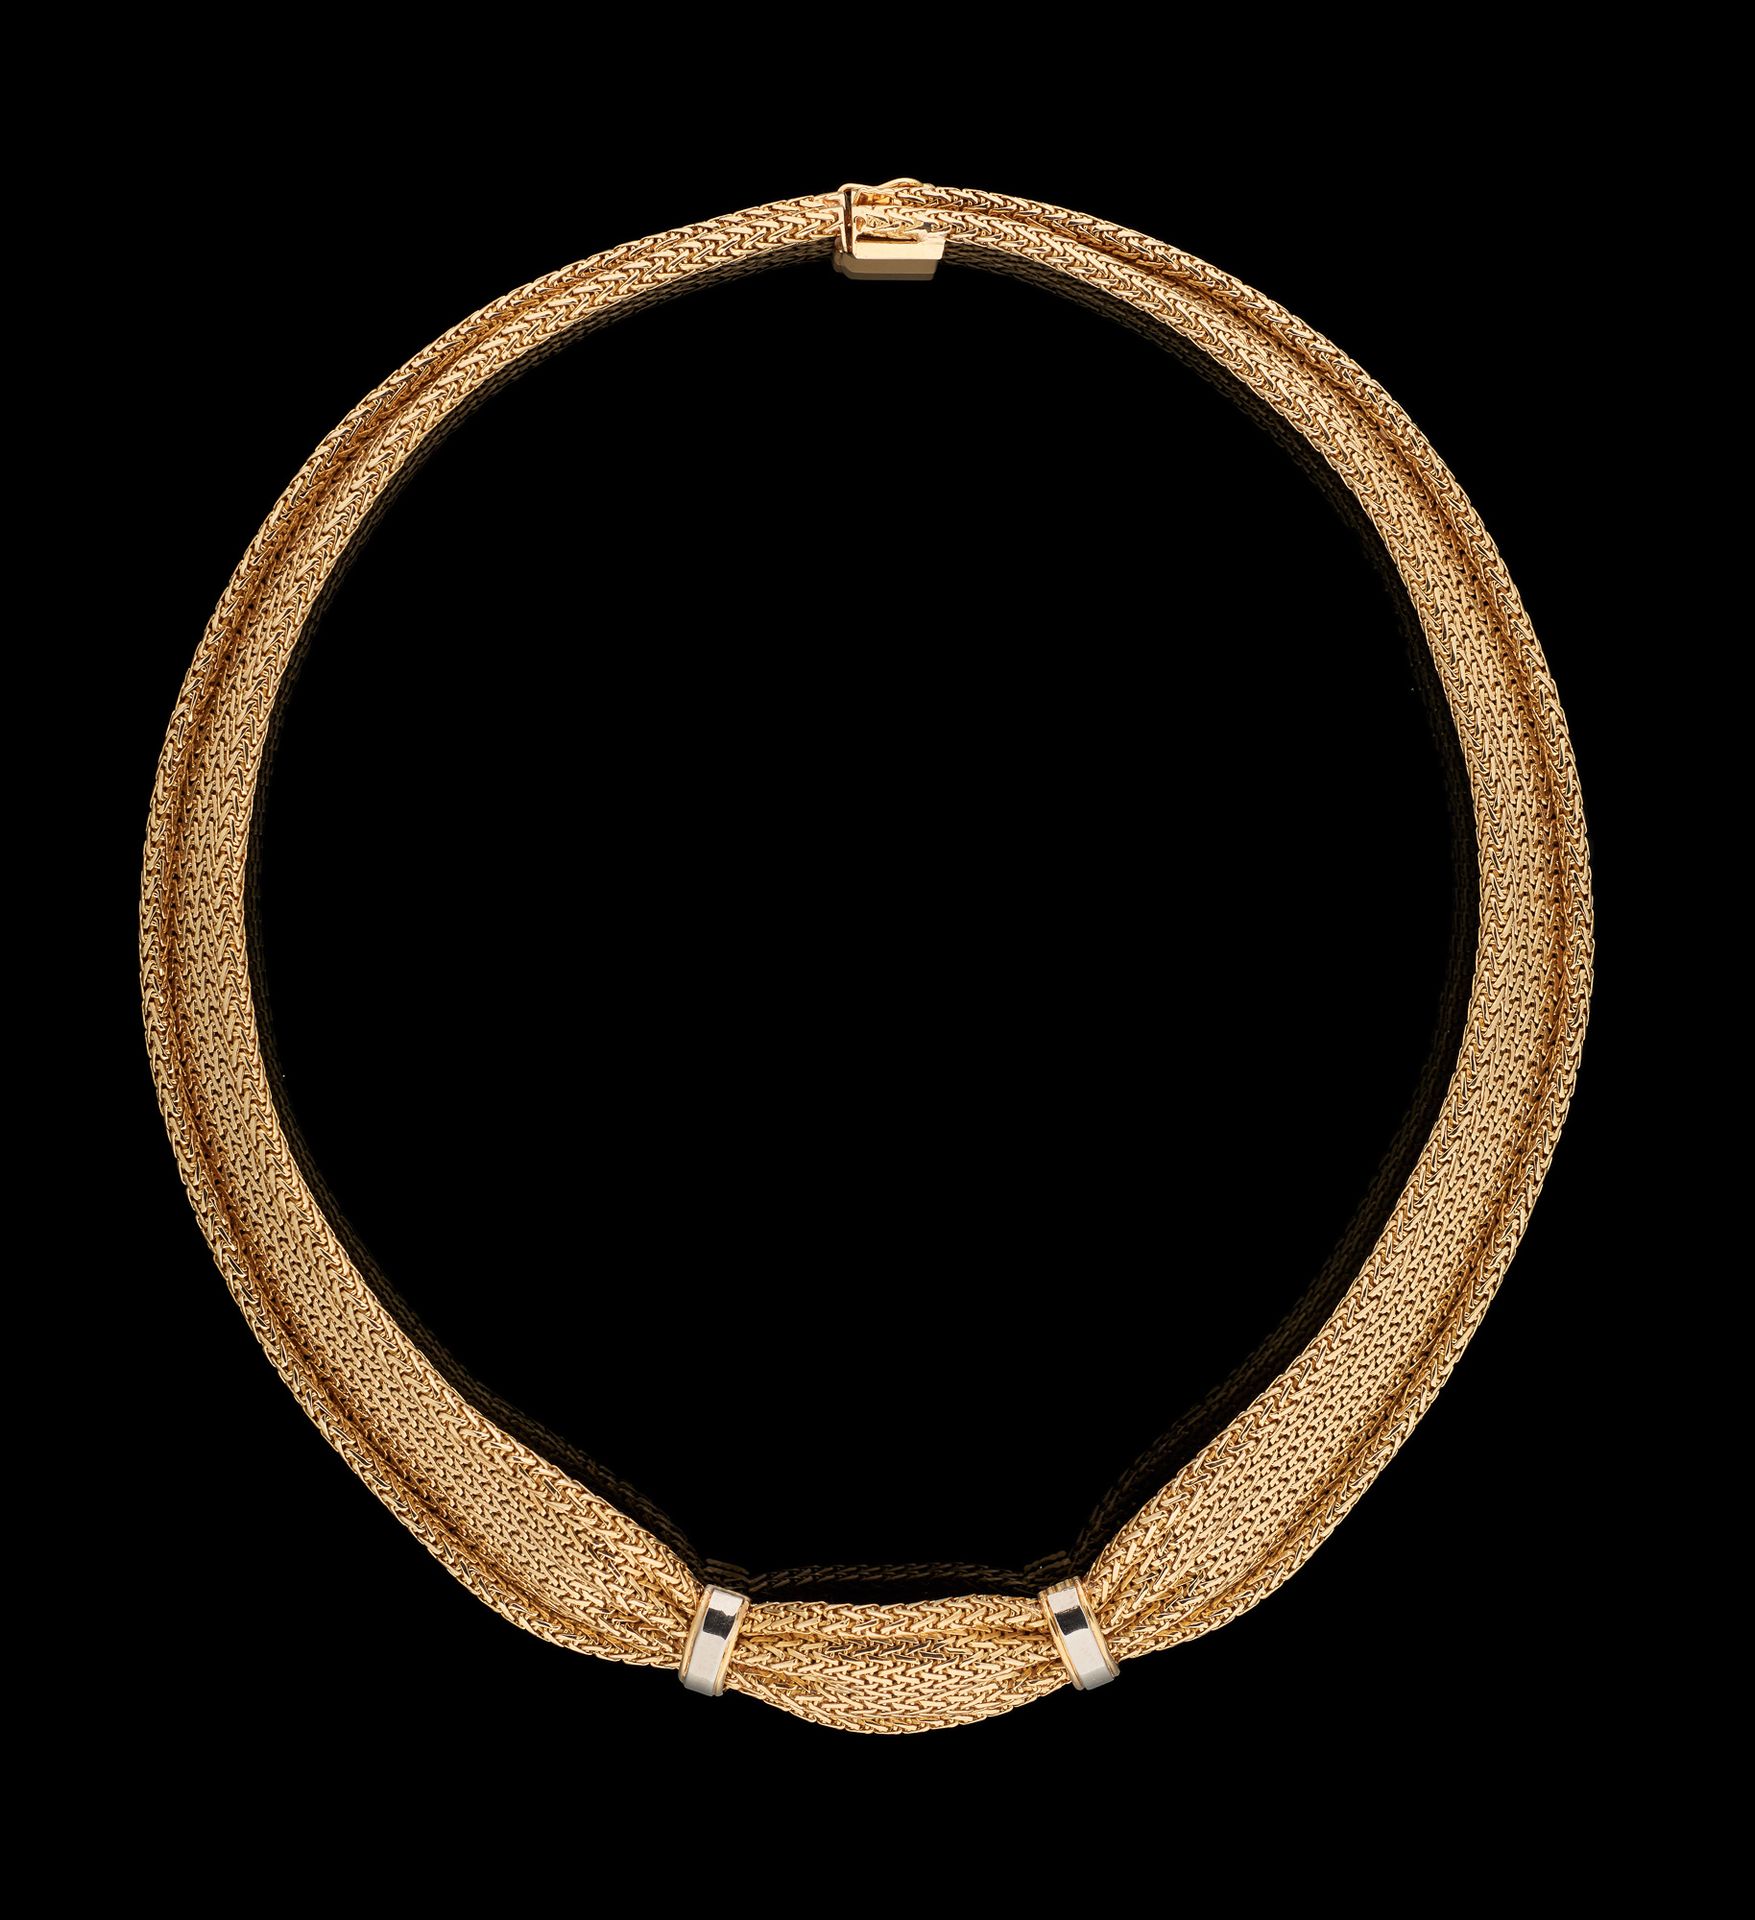 Circa 1950. 珠宝：黄金项链。

毛重：+/- 74克。